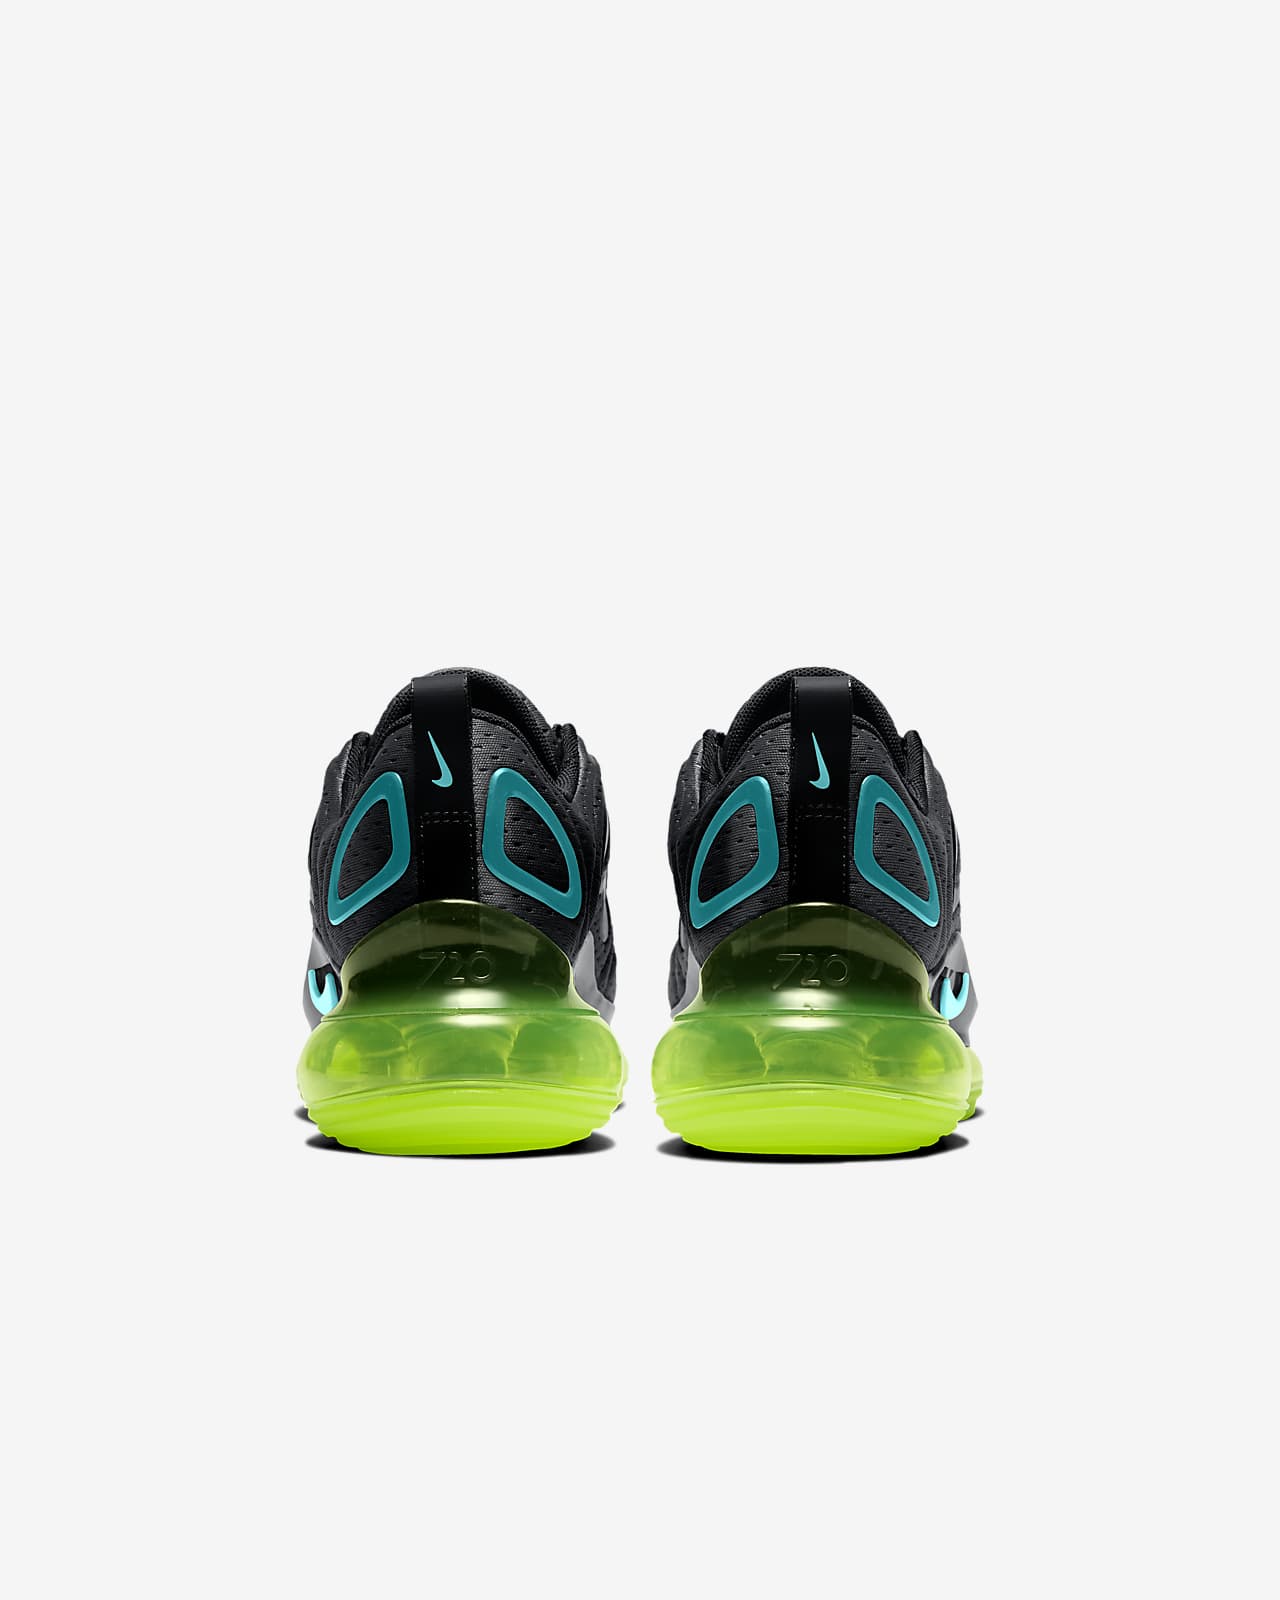 Calzado para niños talla pequeña/grande Nike Air Max 720 تصاميم ملابس